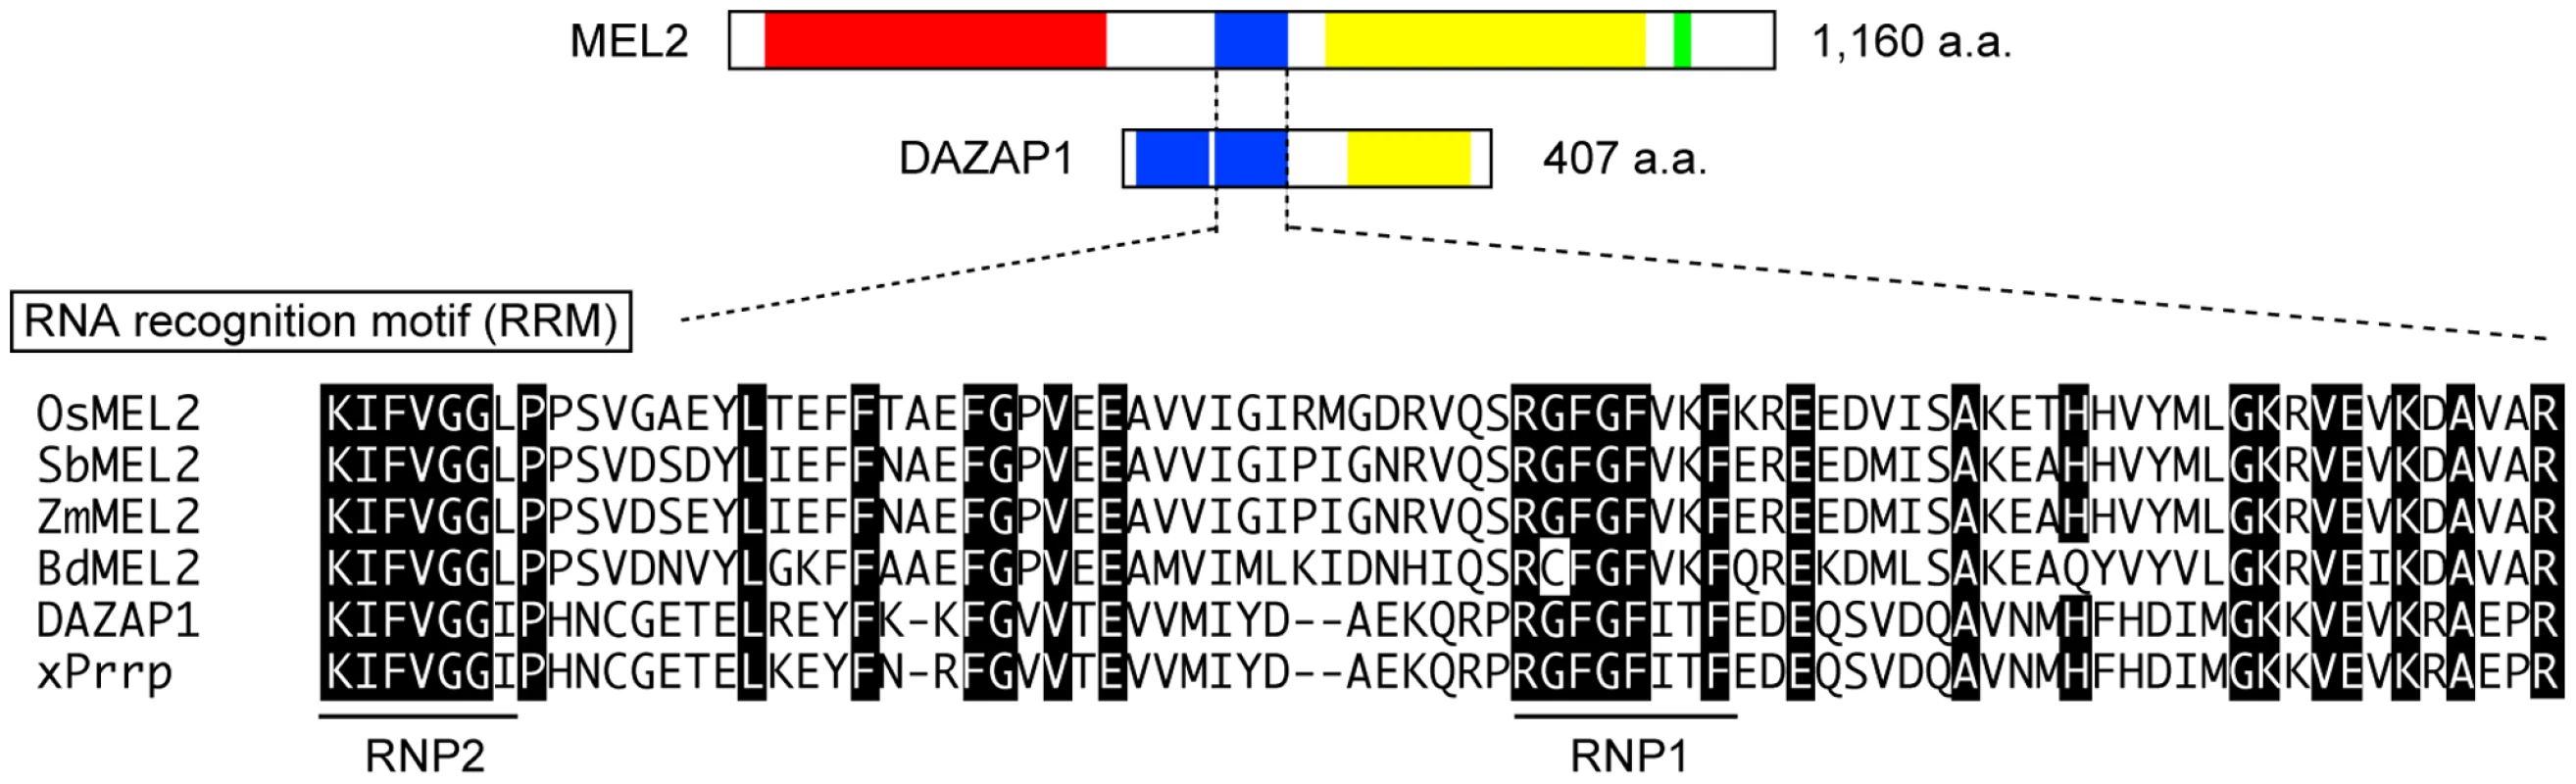 Rice MEL2 is the RRM protein partially homologous to human DAZAP1.